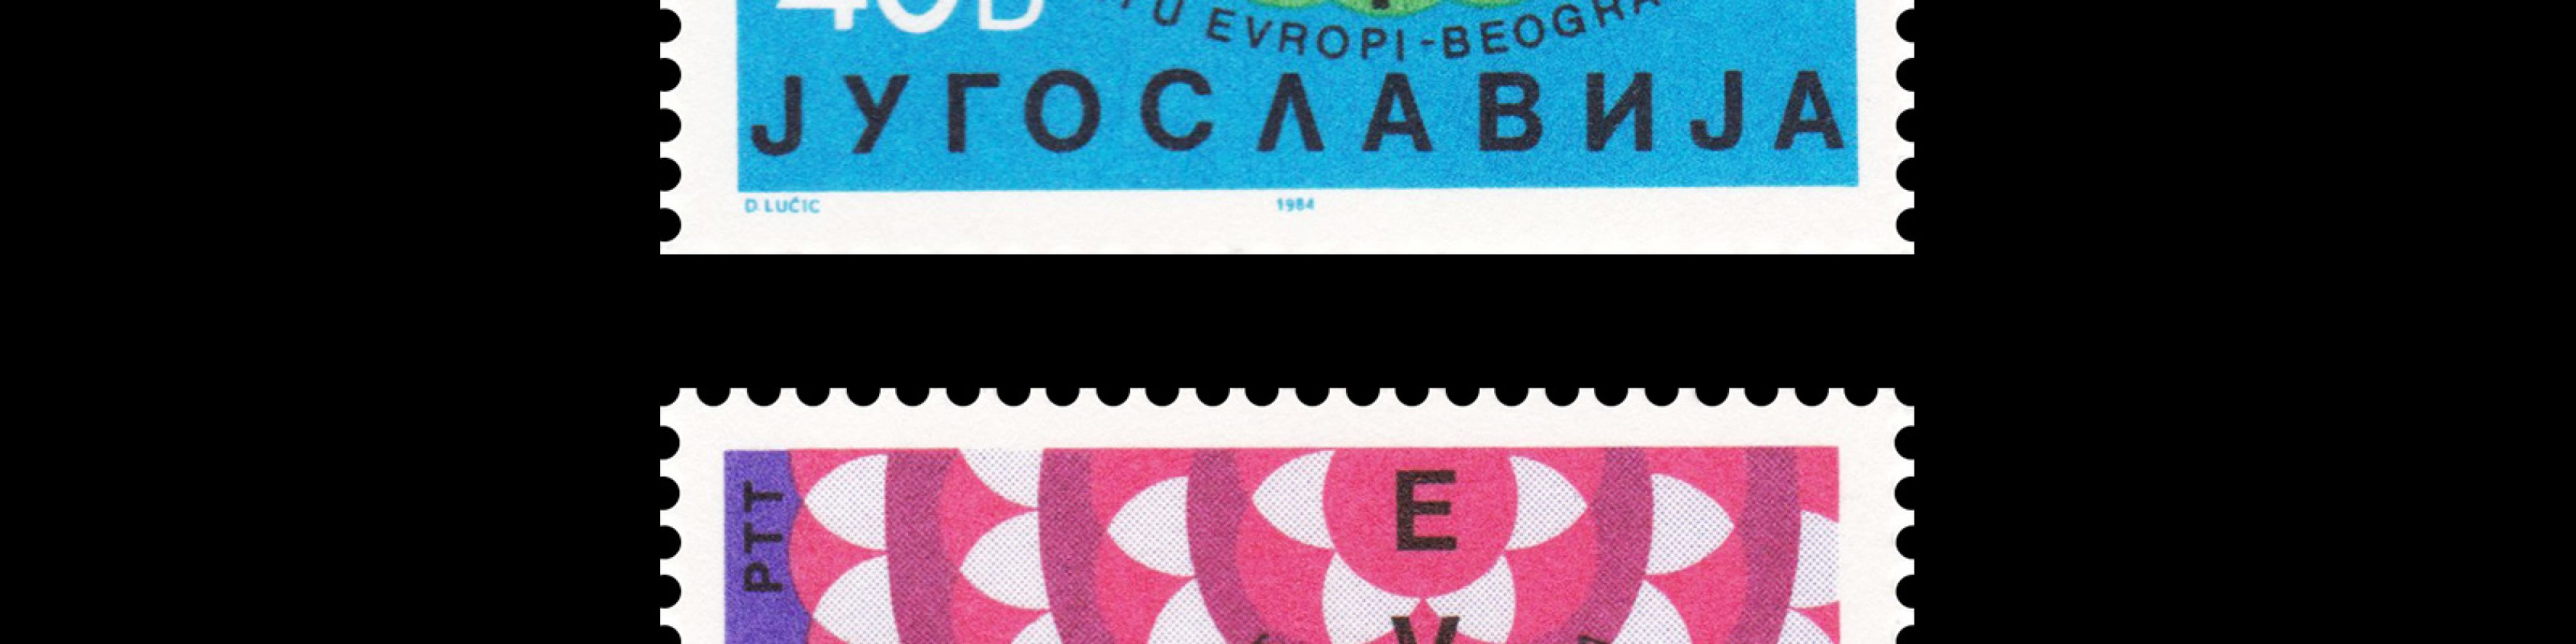 Security Conference, Yugoslavia Stamps, 1984. Design by D Lučić.